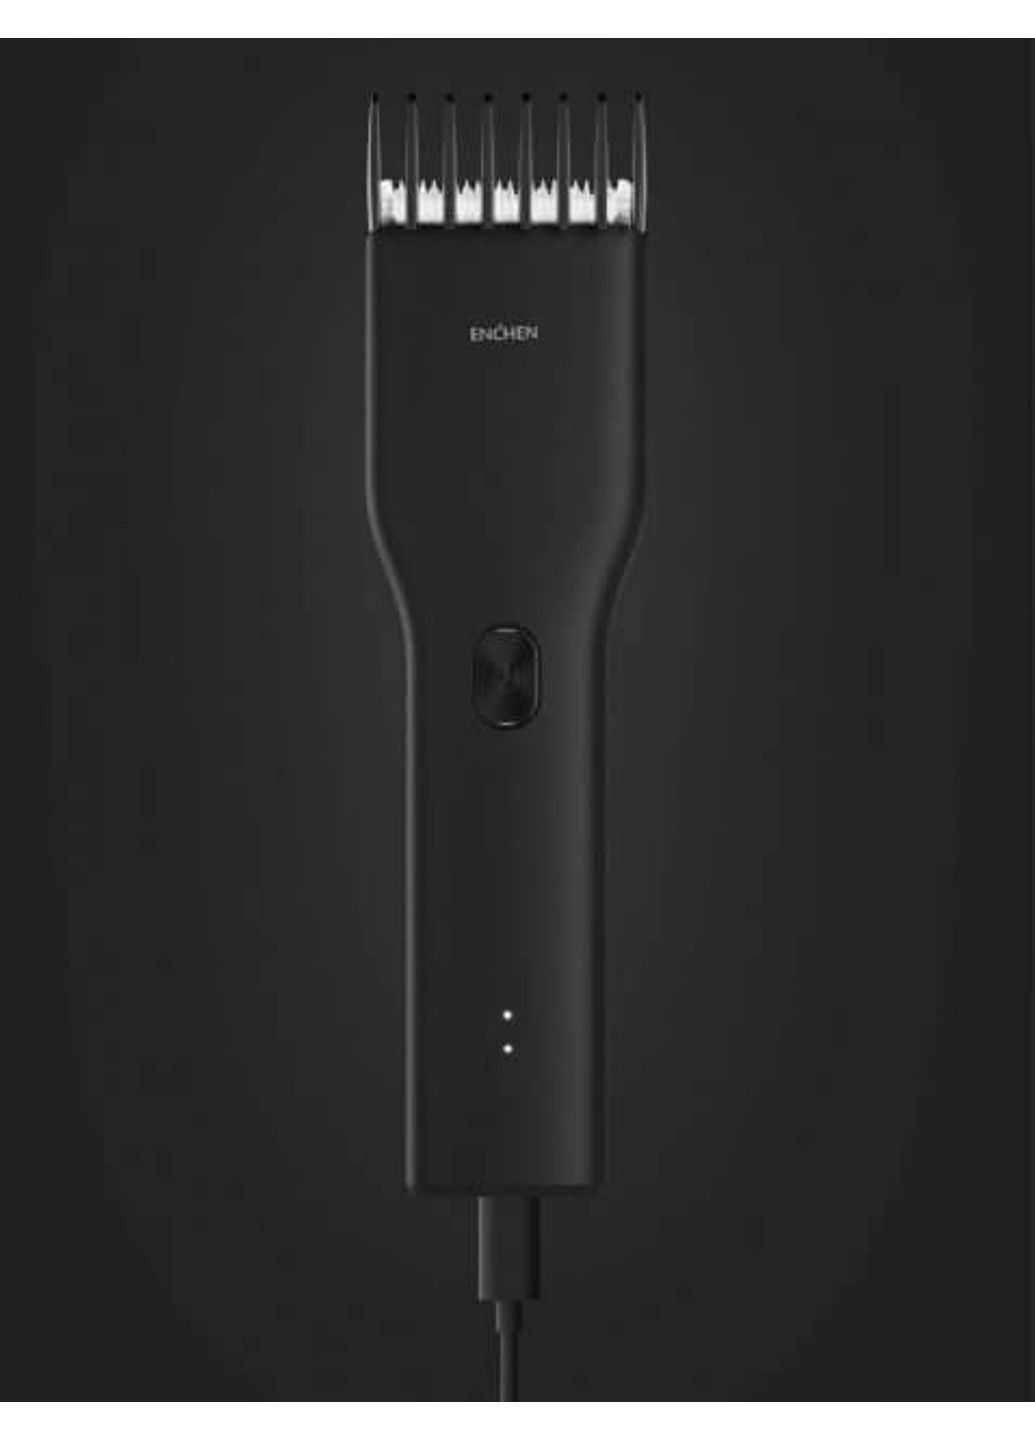 Машинка для стрижки волосся Xiaomi Boost Black Enchen (282713823)